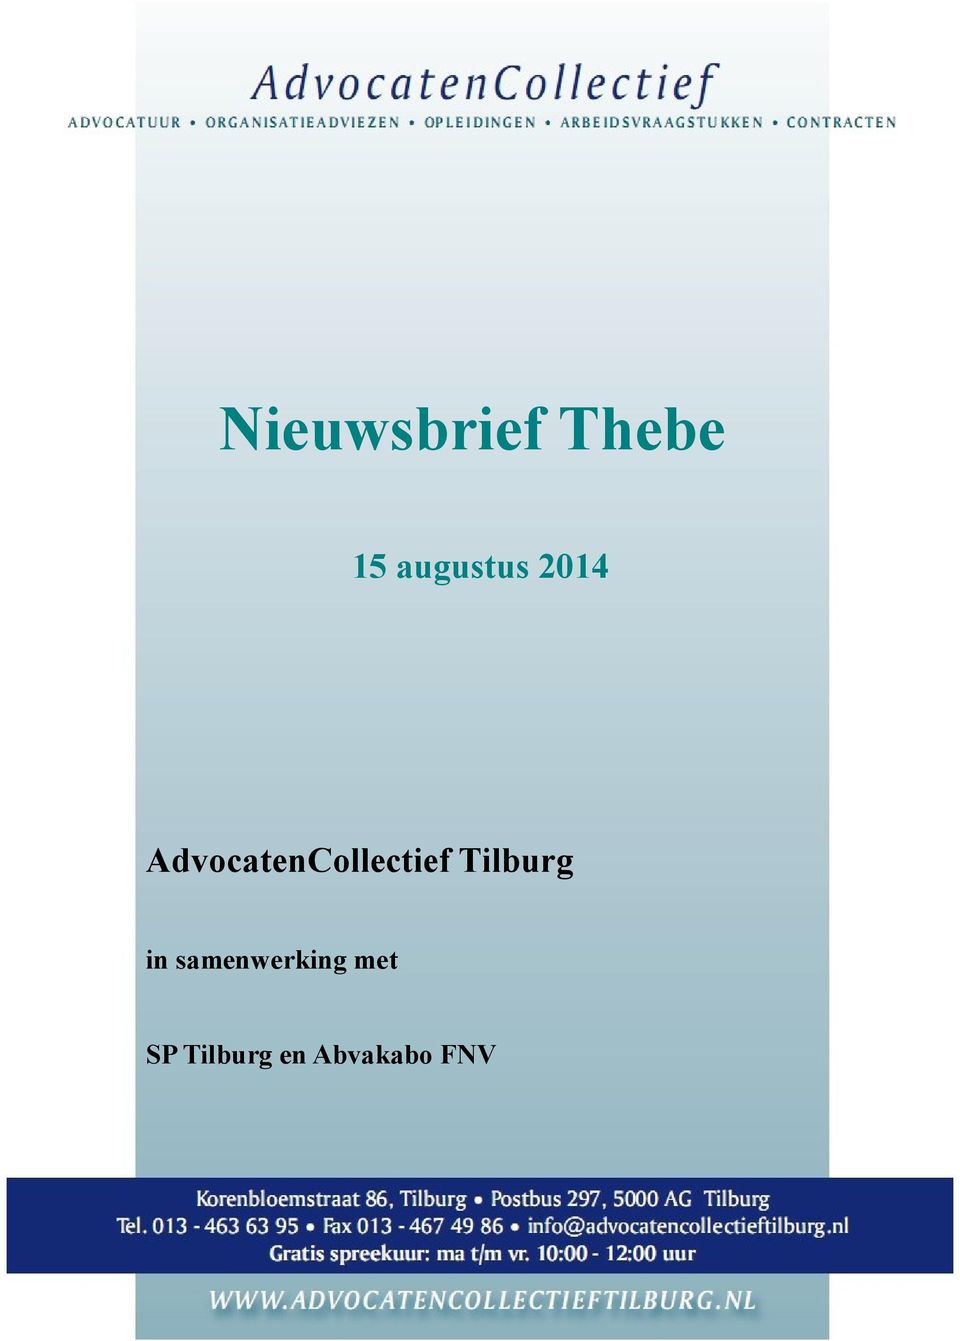 AdvocatenCollectief Tilburg